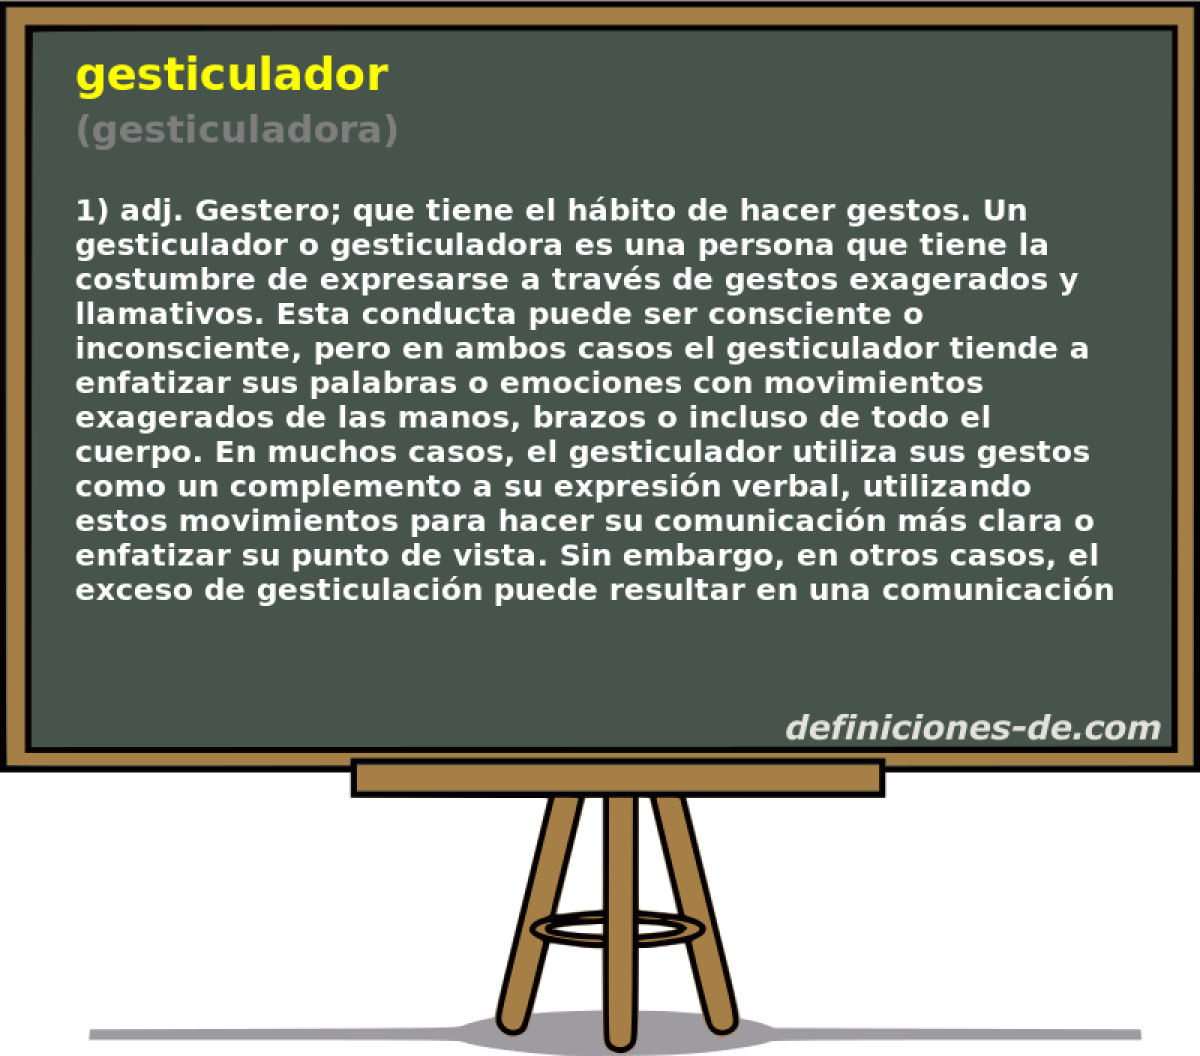 gesticulador (gesticuladora)